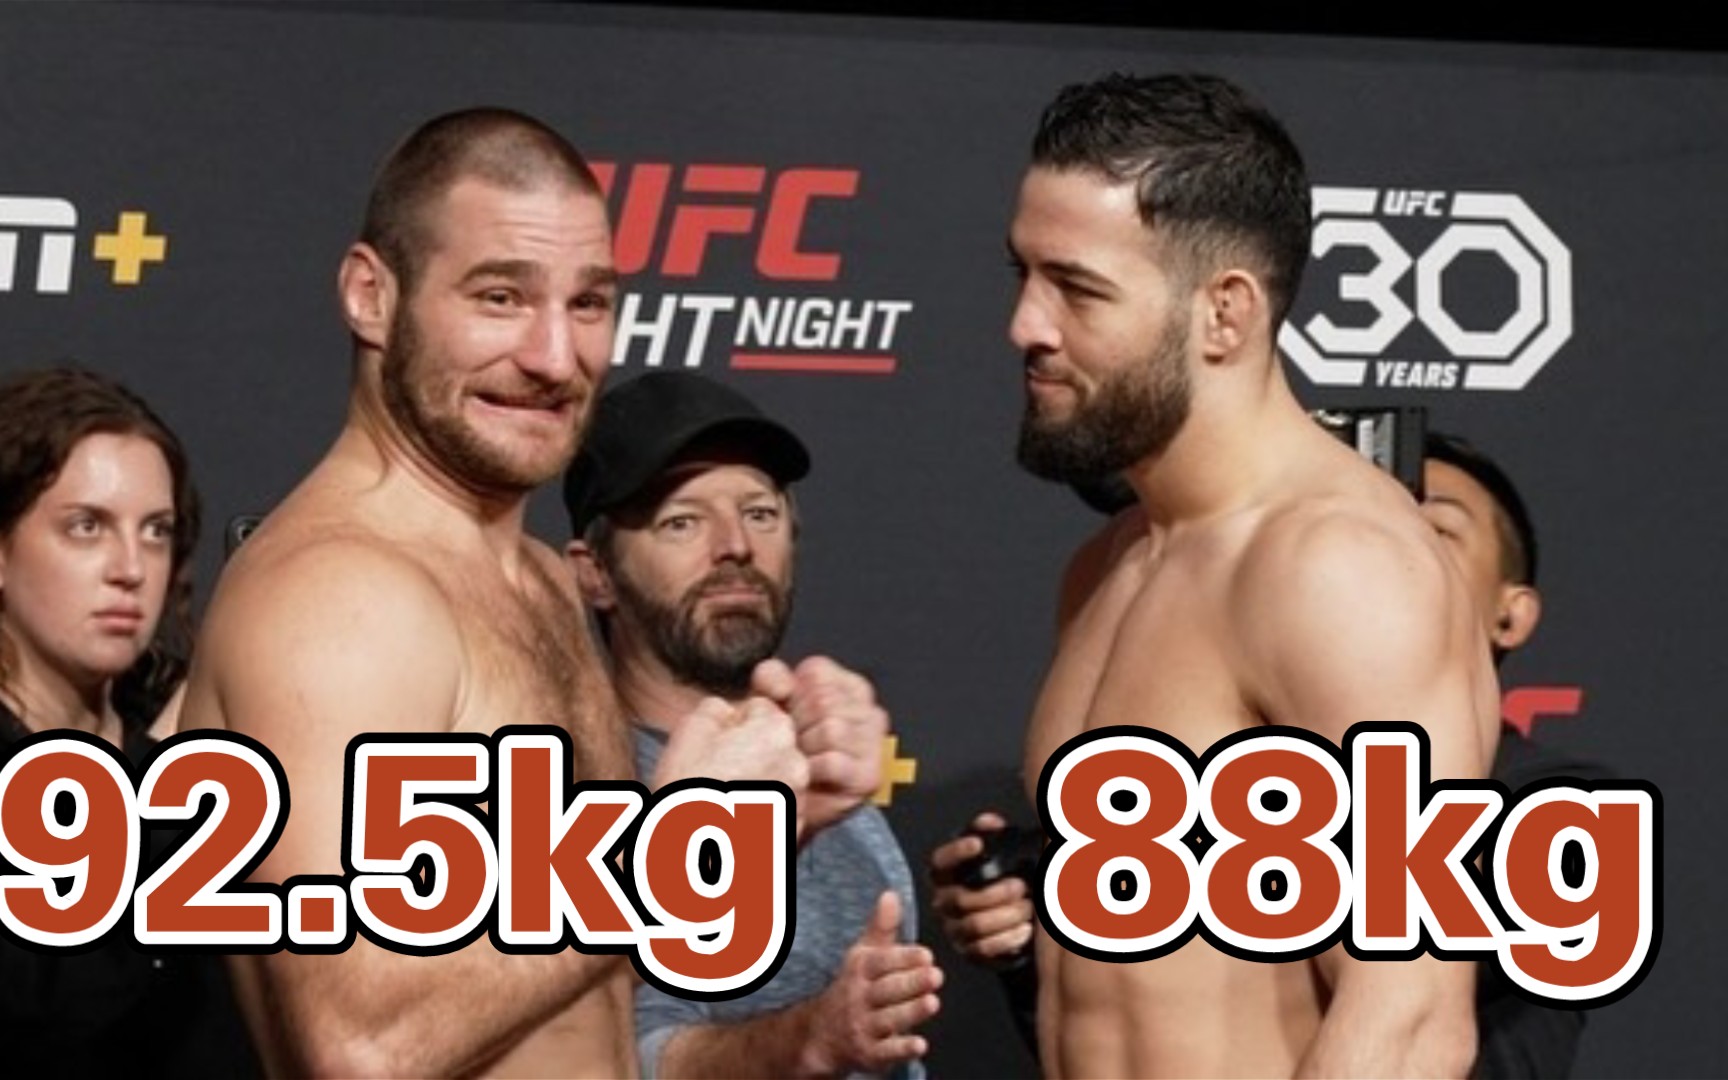 『UFC格斗之夜称重』吧主:我比你重了9斤，怎么没感觉到大?